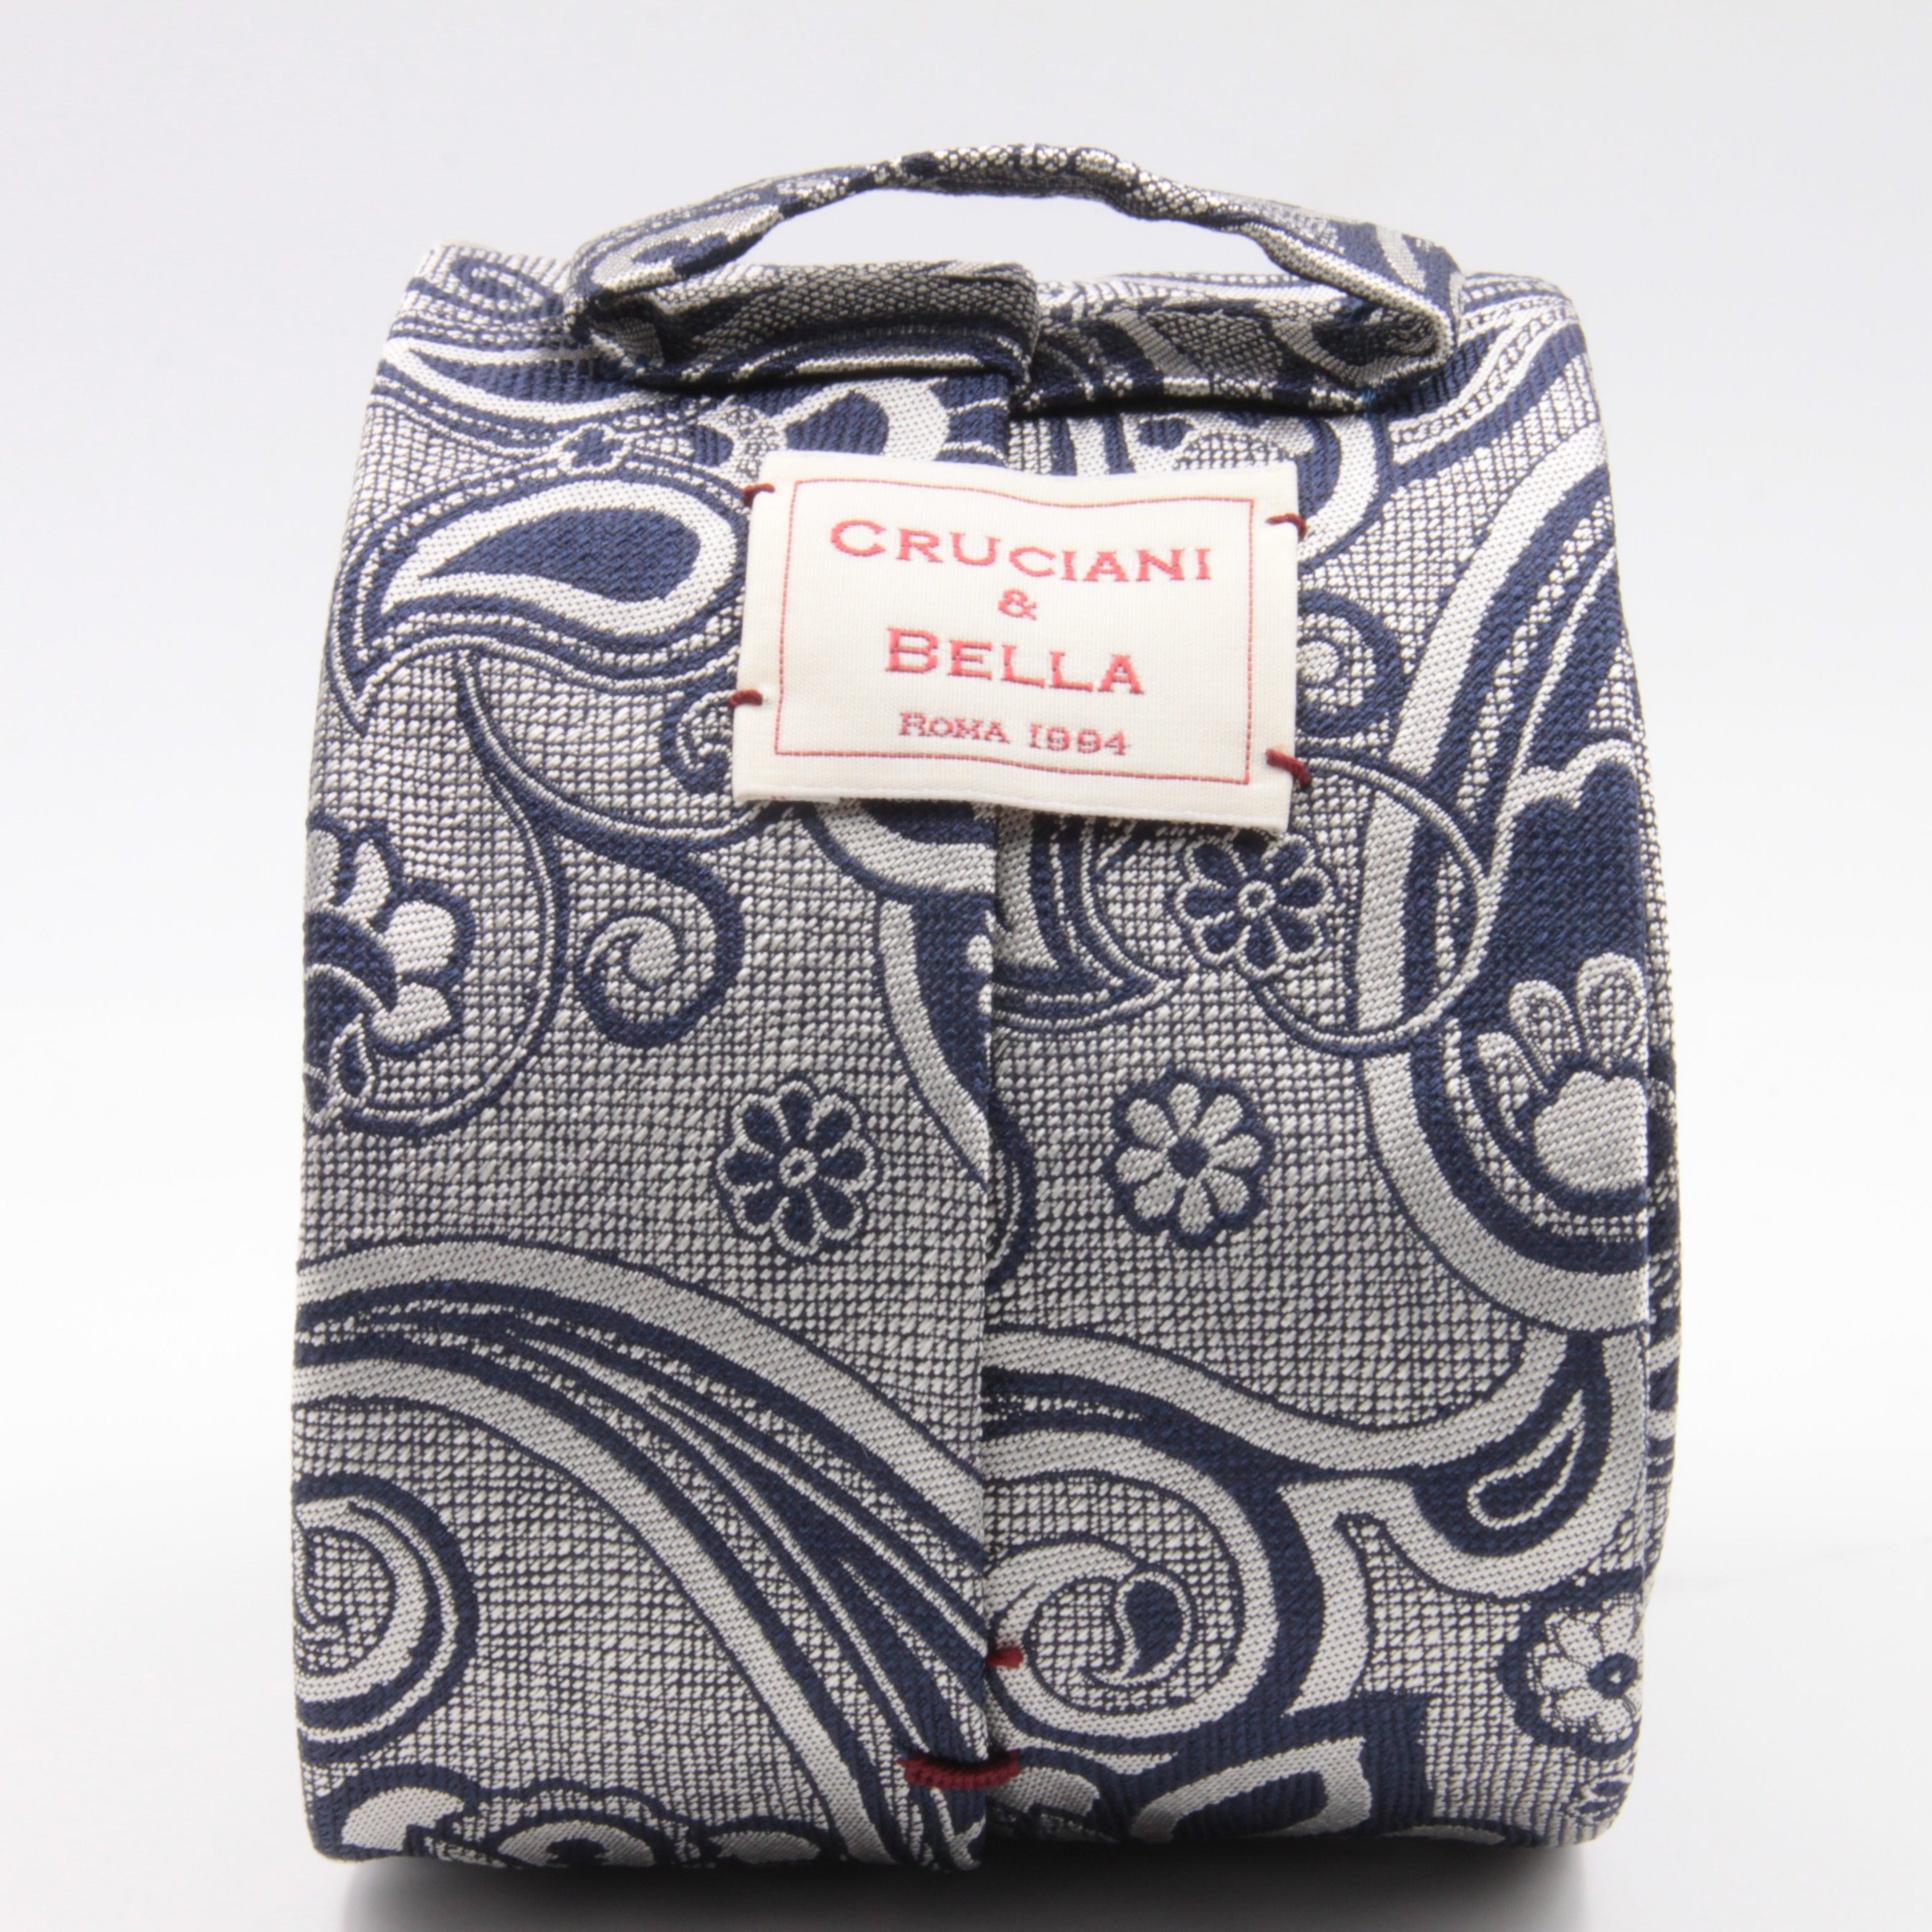 Cruciani & Bella 100% Silk Jacquard  Light Silver and Blue Paisley Tie Handmade in Italy 8 cm x 150 cm #4406  